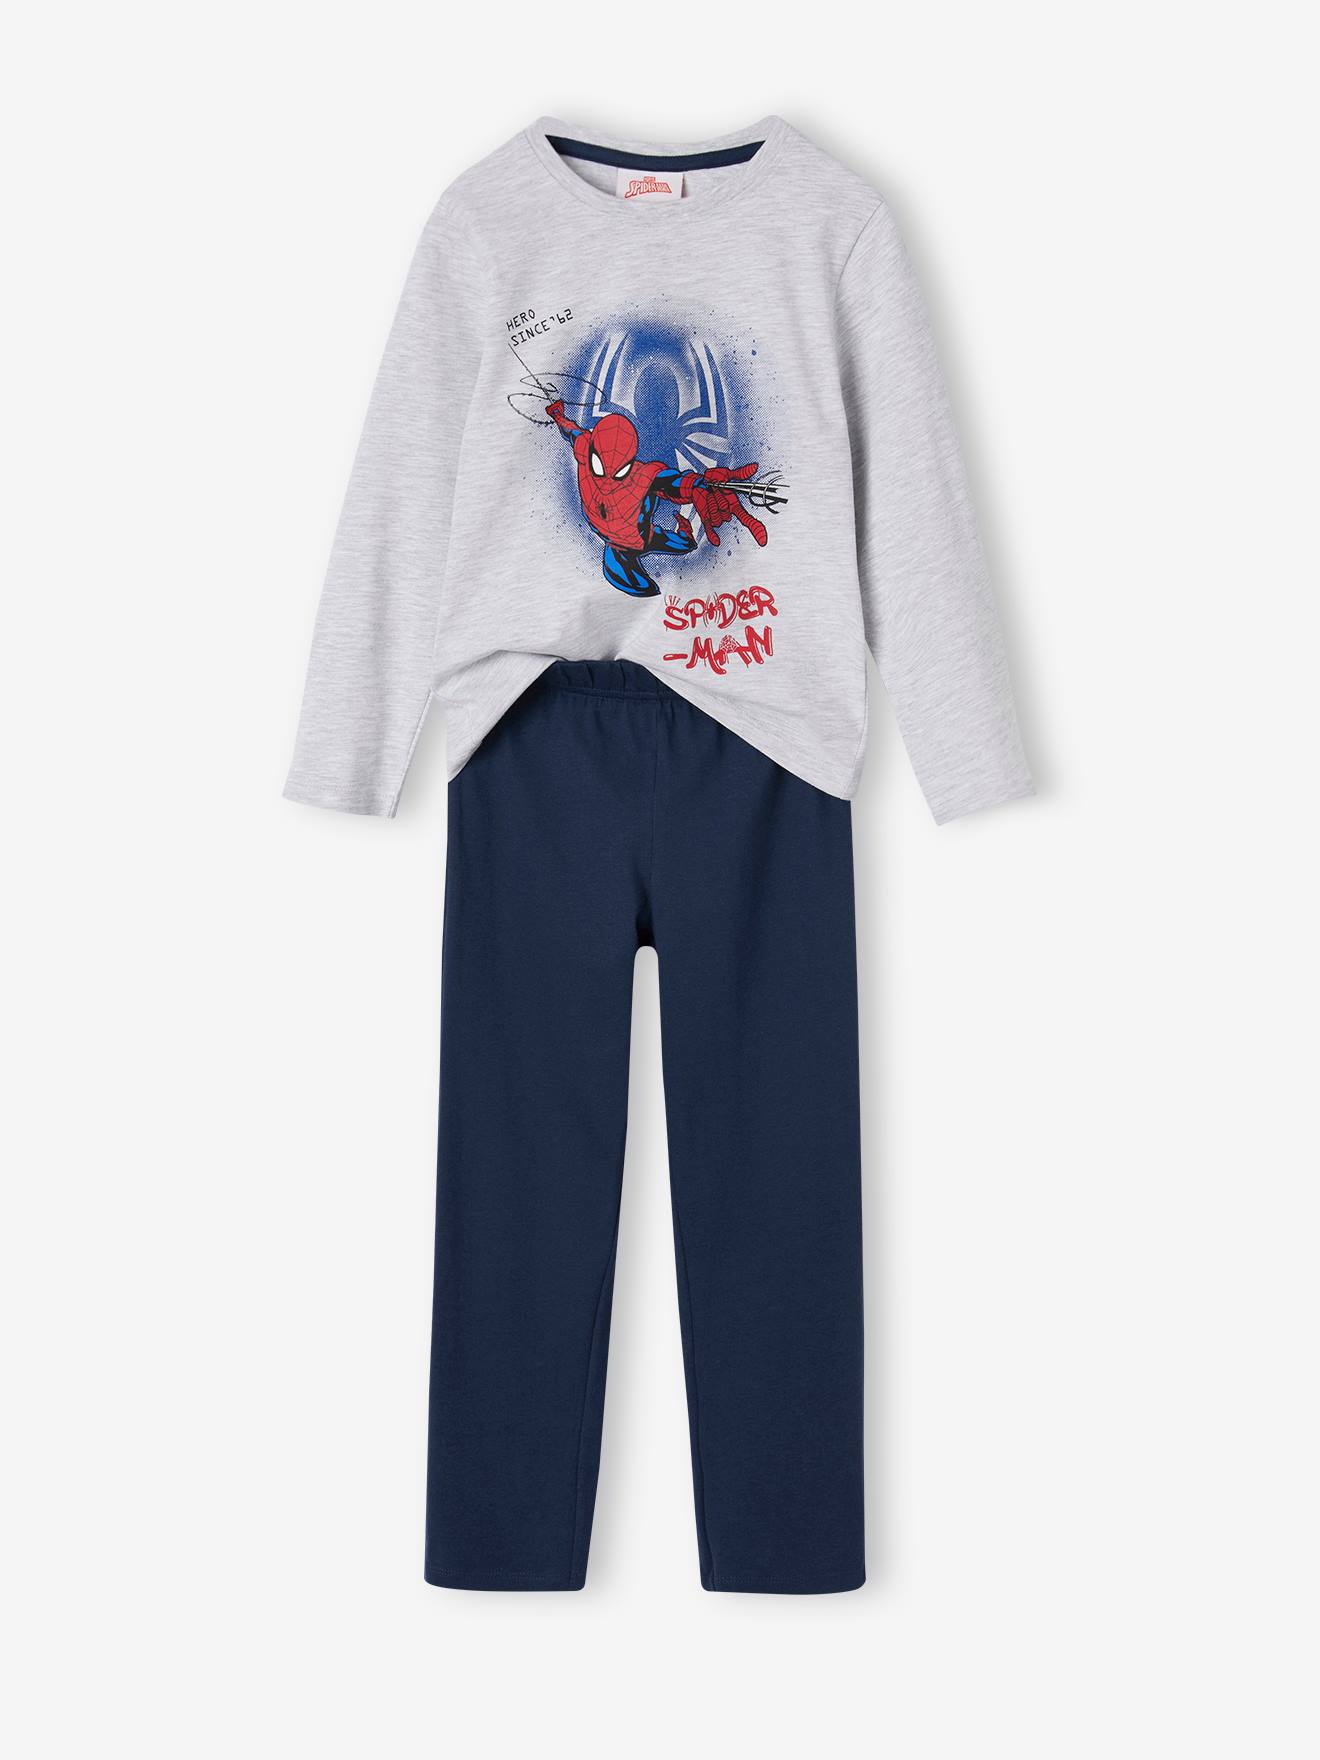 Two-tone Marvel(r) Spider-Man Pyjamas for Boys navy blue